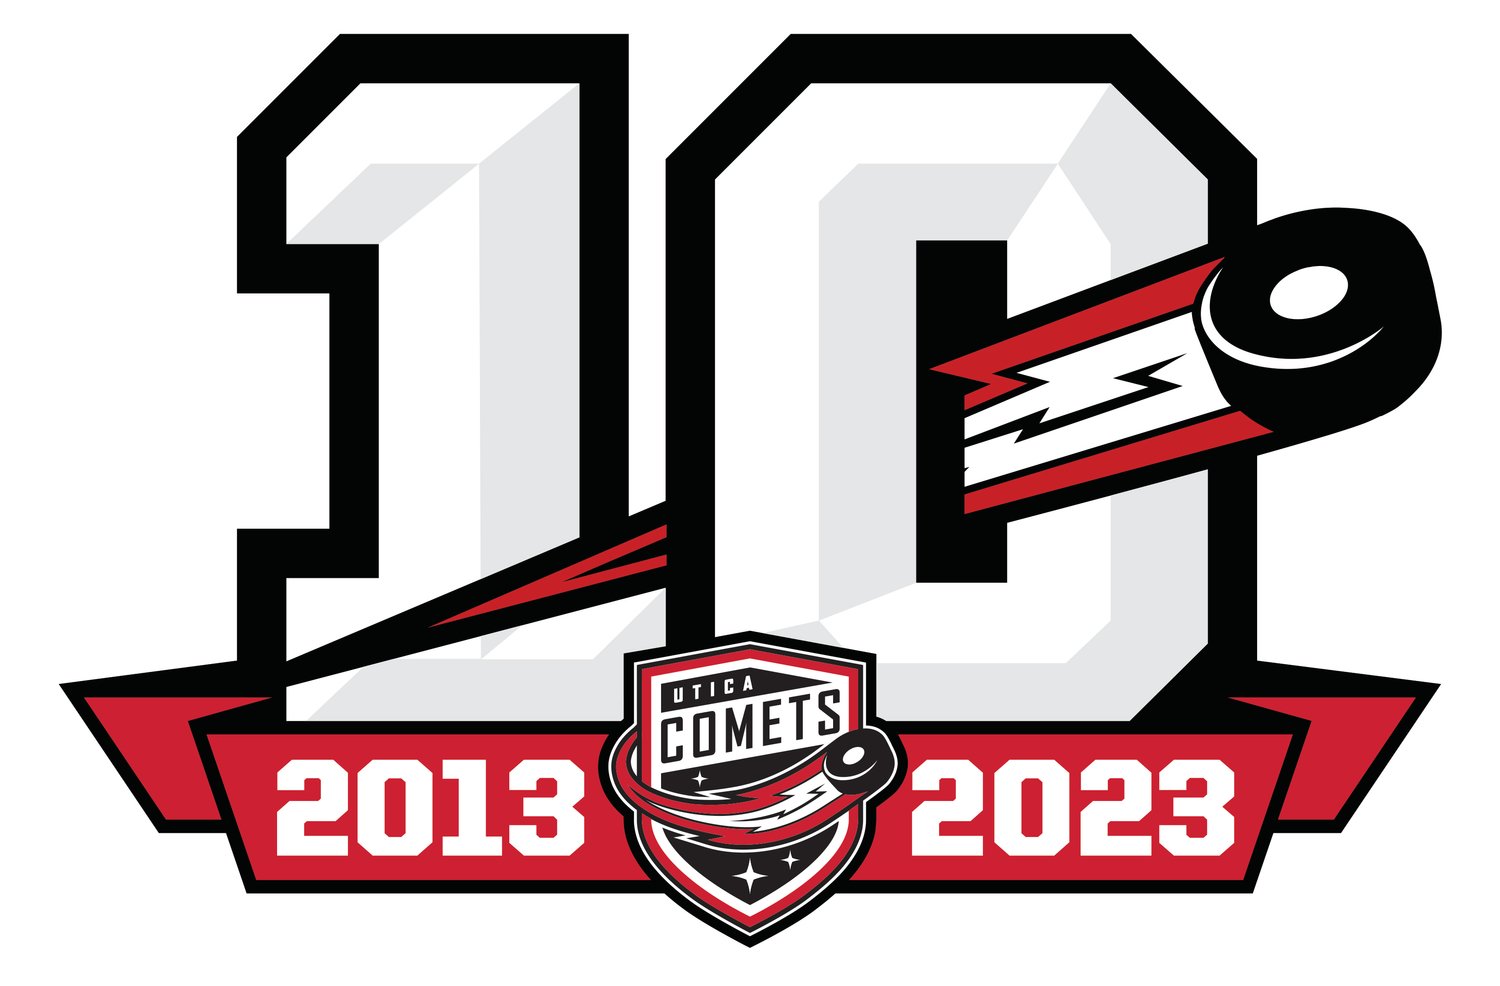 Utica Comets' 10th season logo.